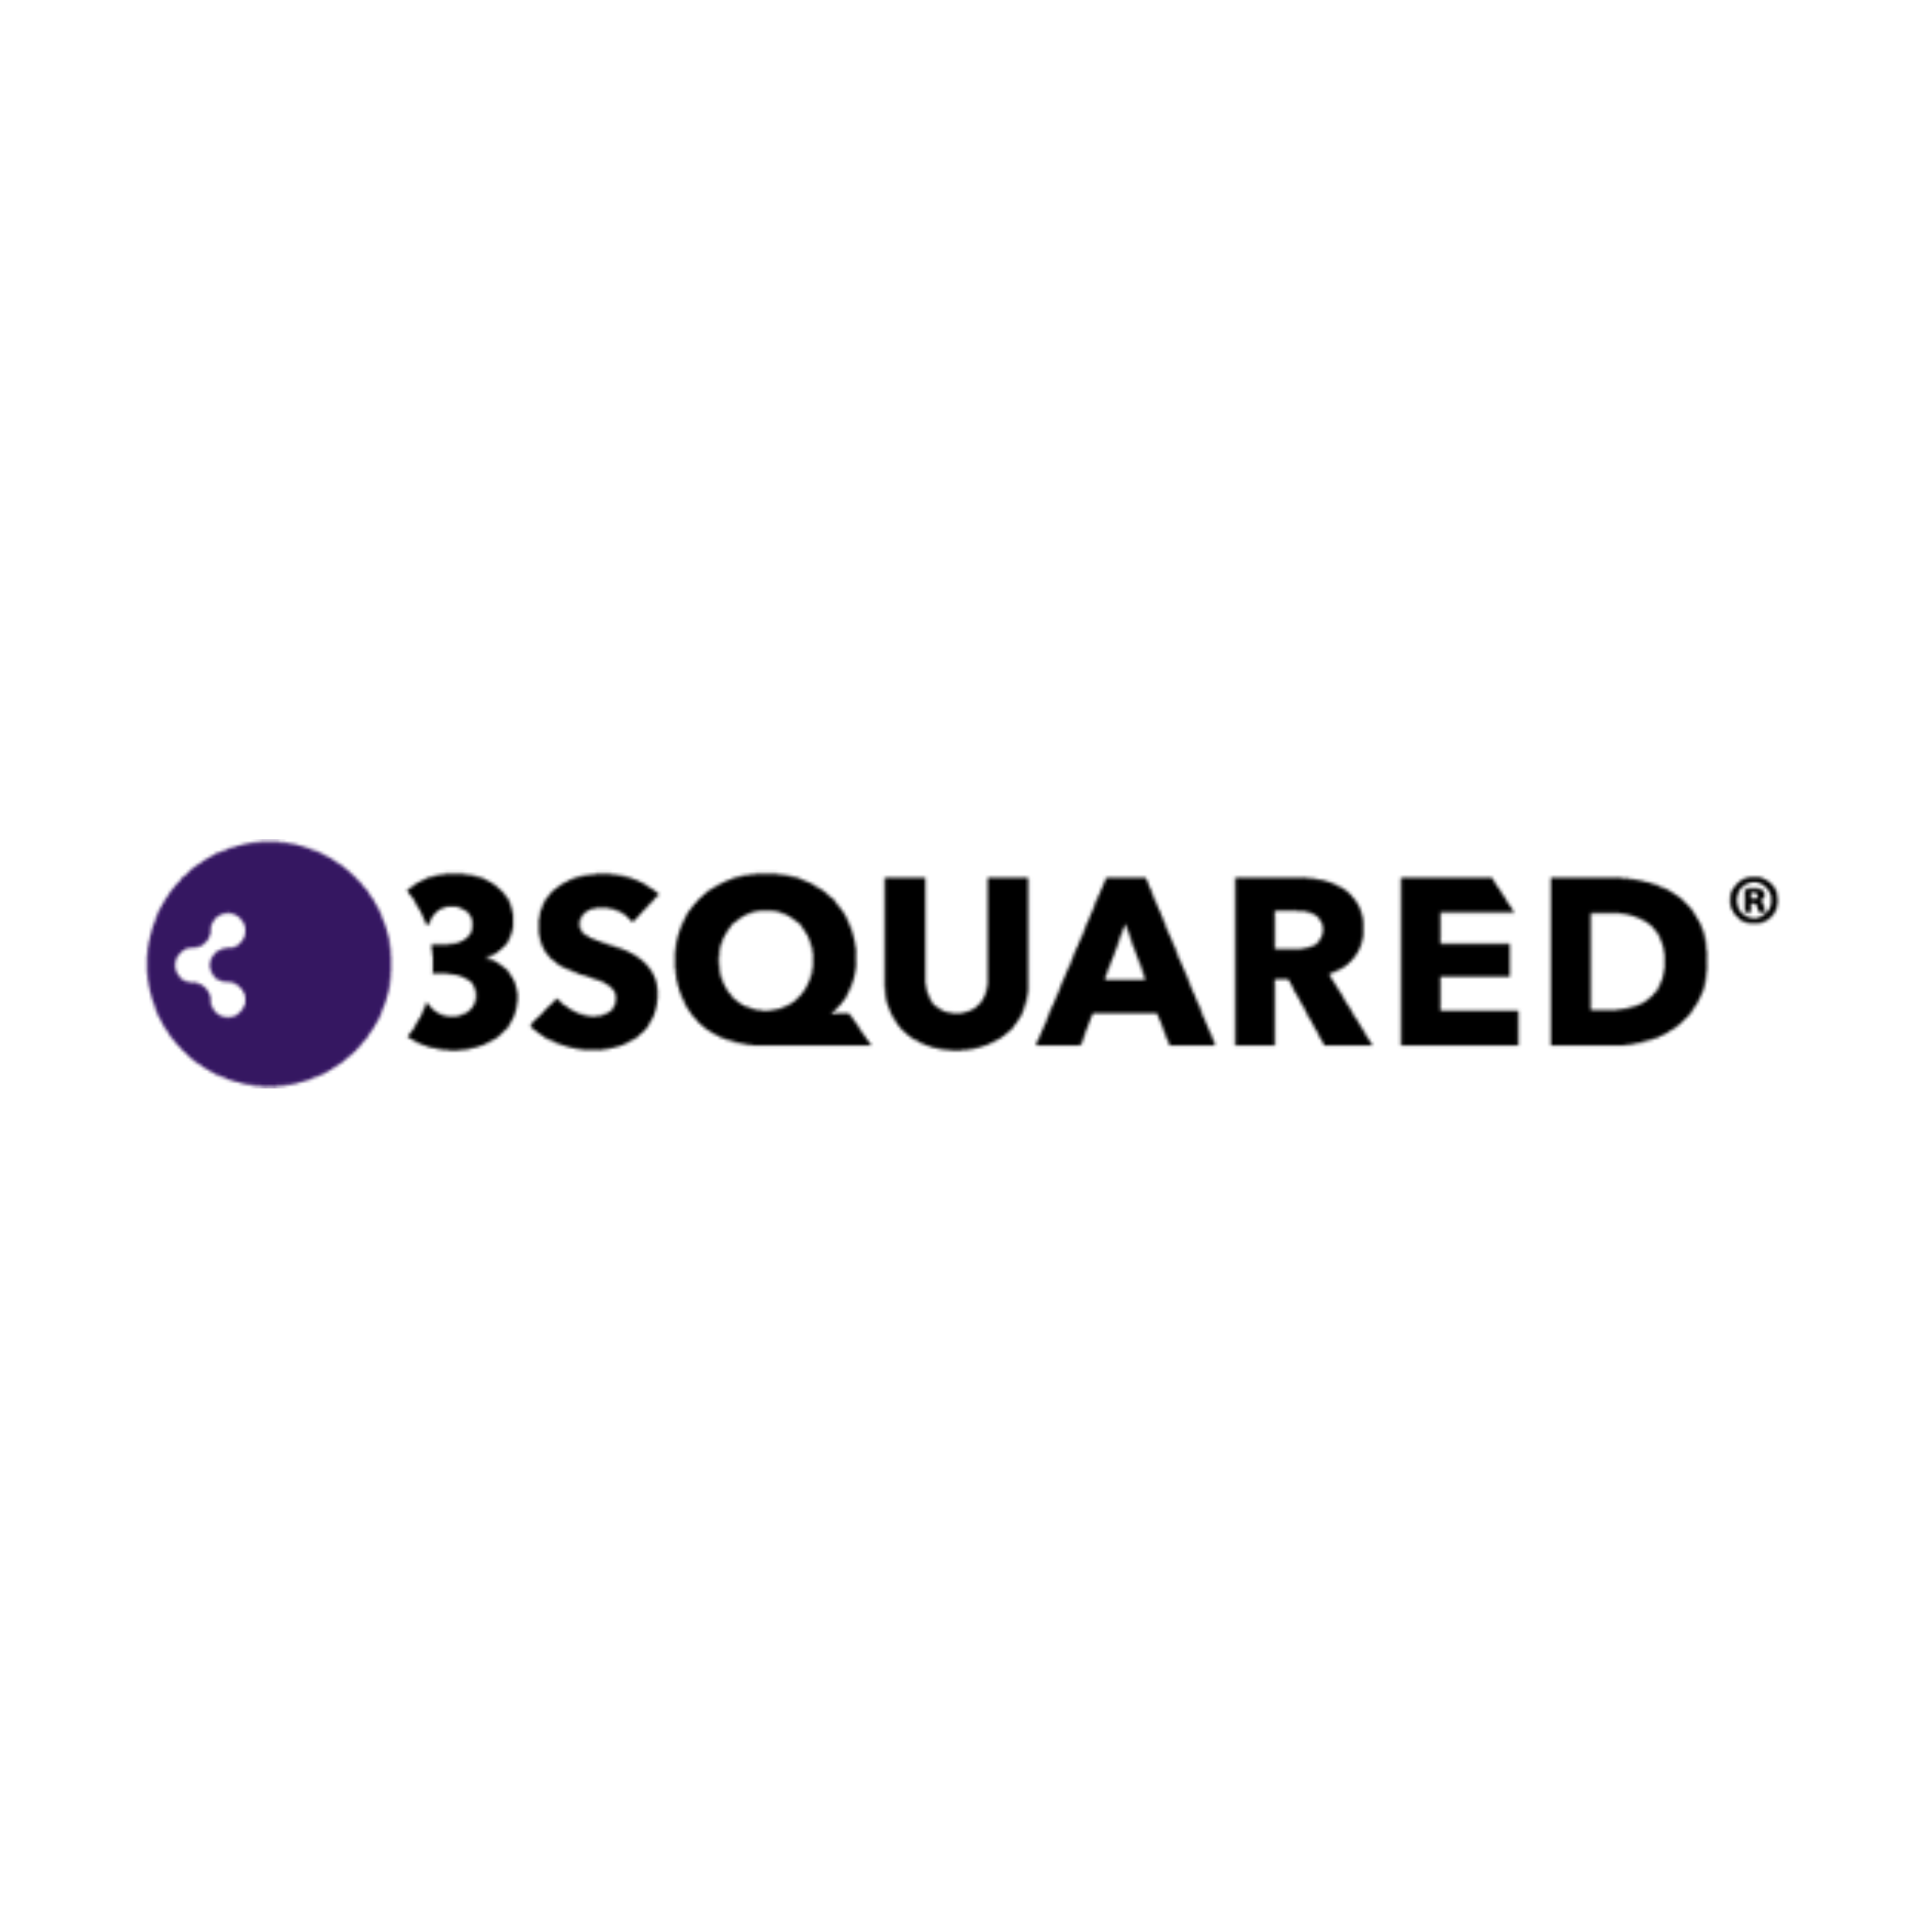 3Squared Showcase at the Virtual ‘Great British RailSmart Day’